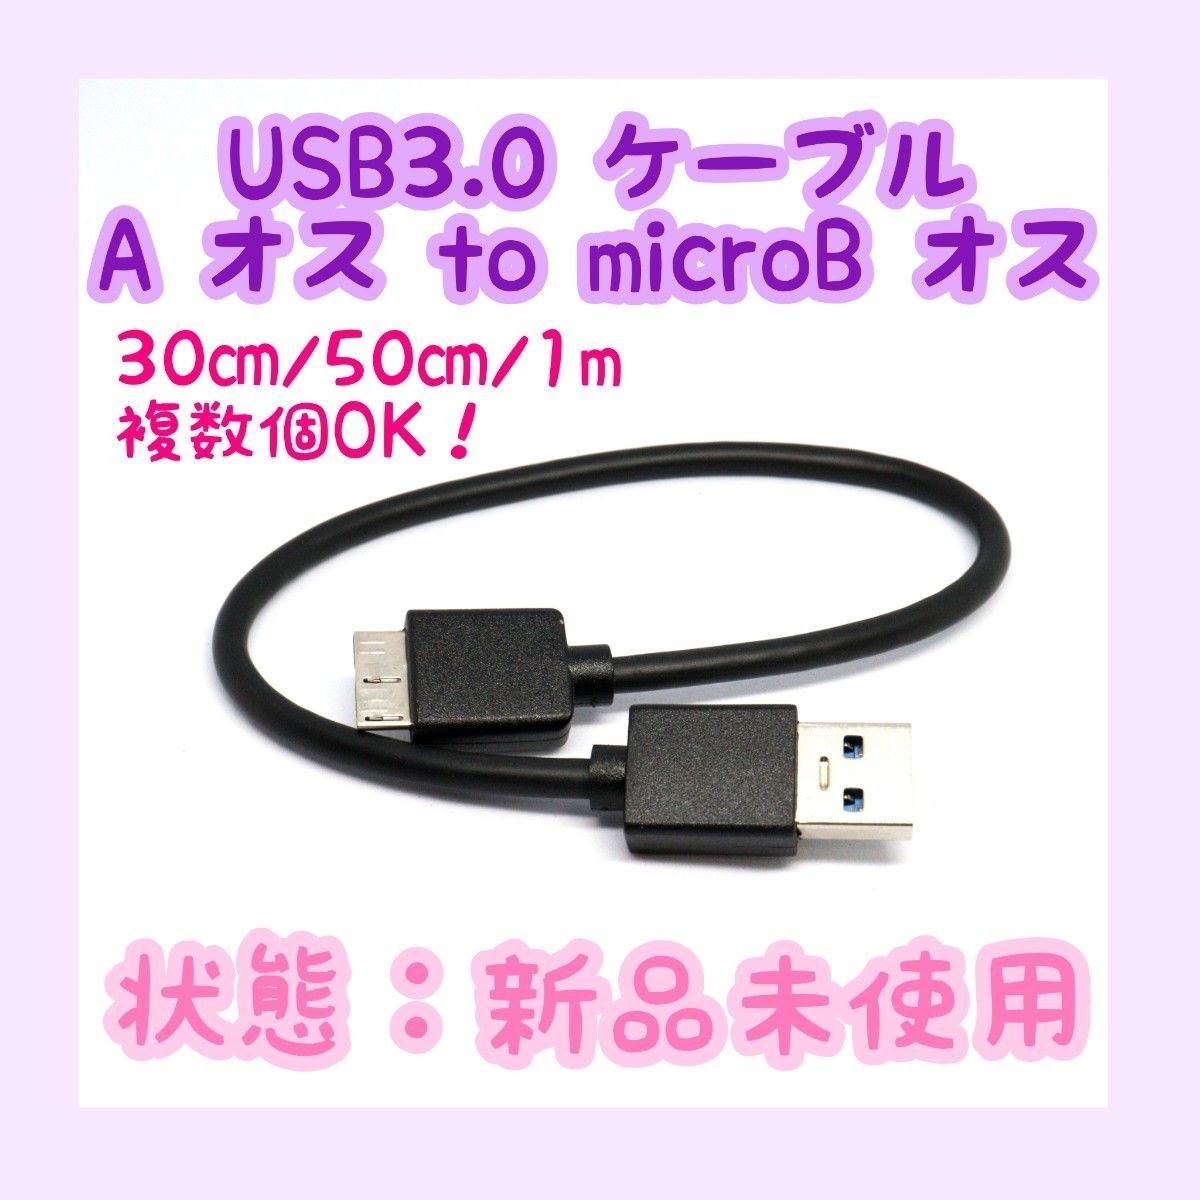 【新品未使用】USBケーブル USB3.0 A to USB3.0 microb micro b 0.3/0.5/1m 複数可能